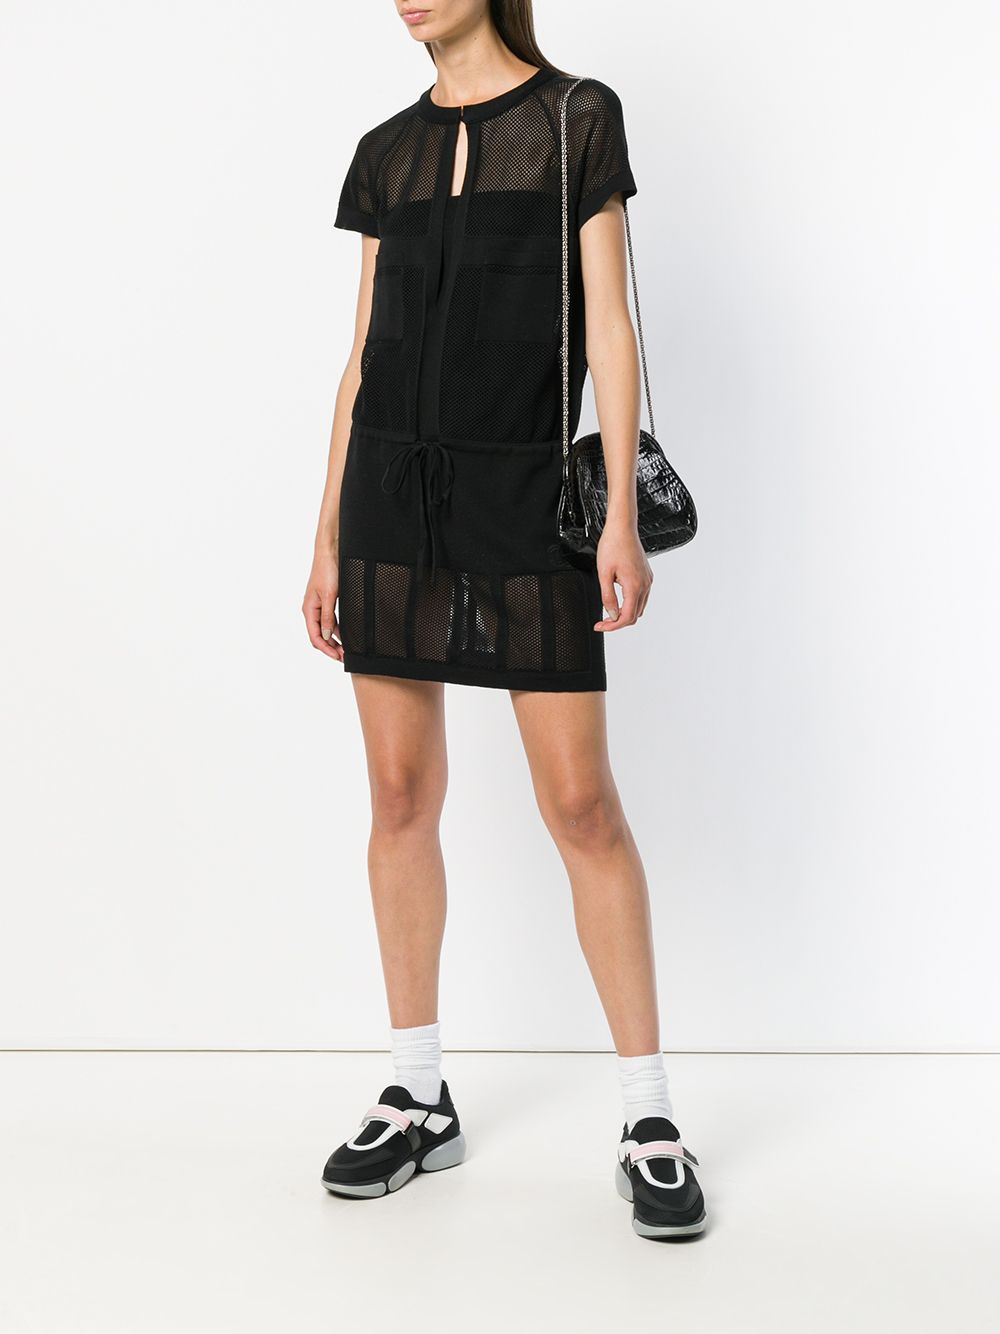 Bespoke your Chanel style dress. #onepiece #onedress #blackdress